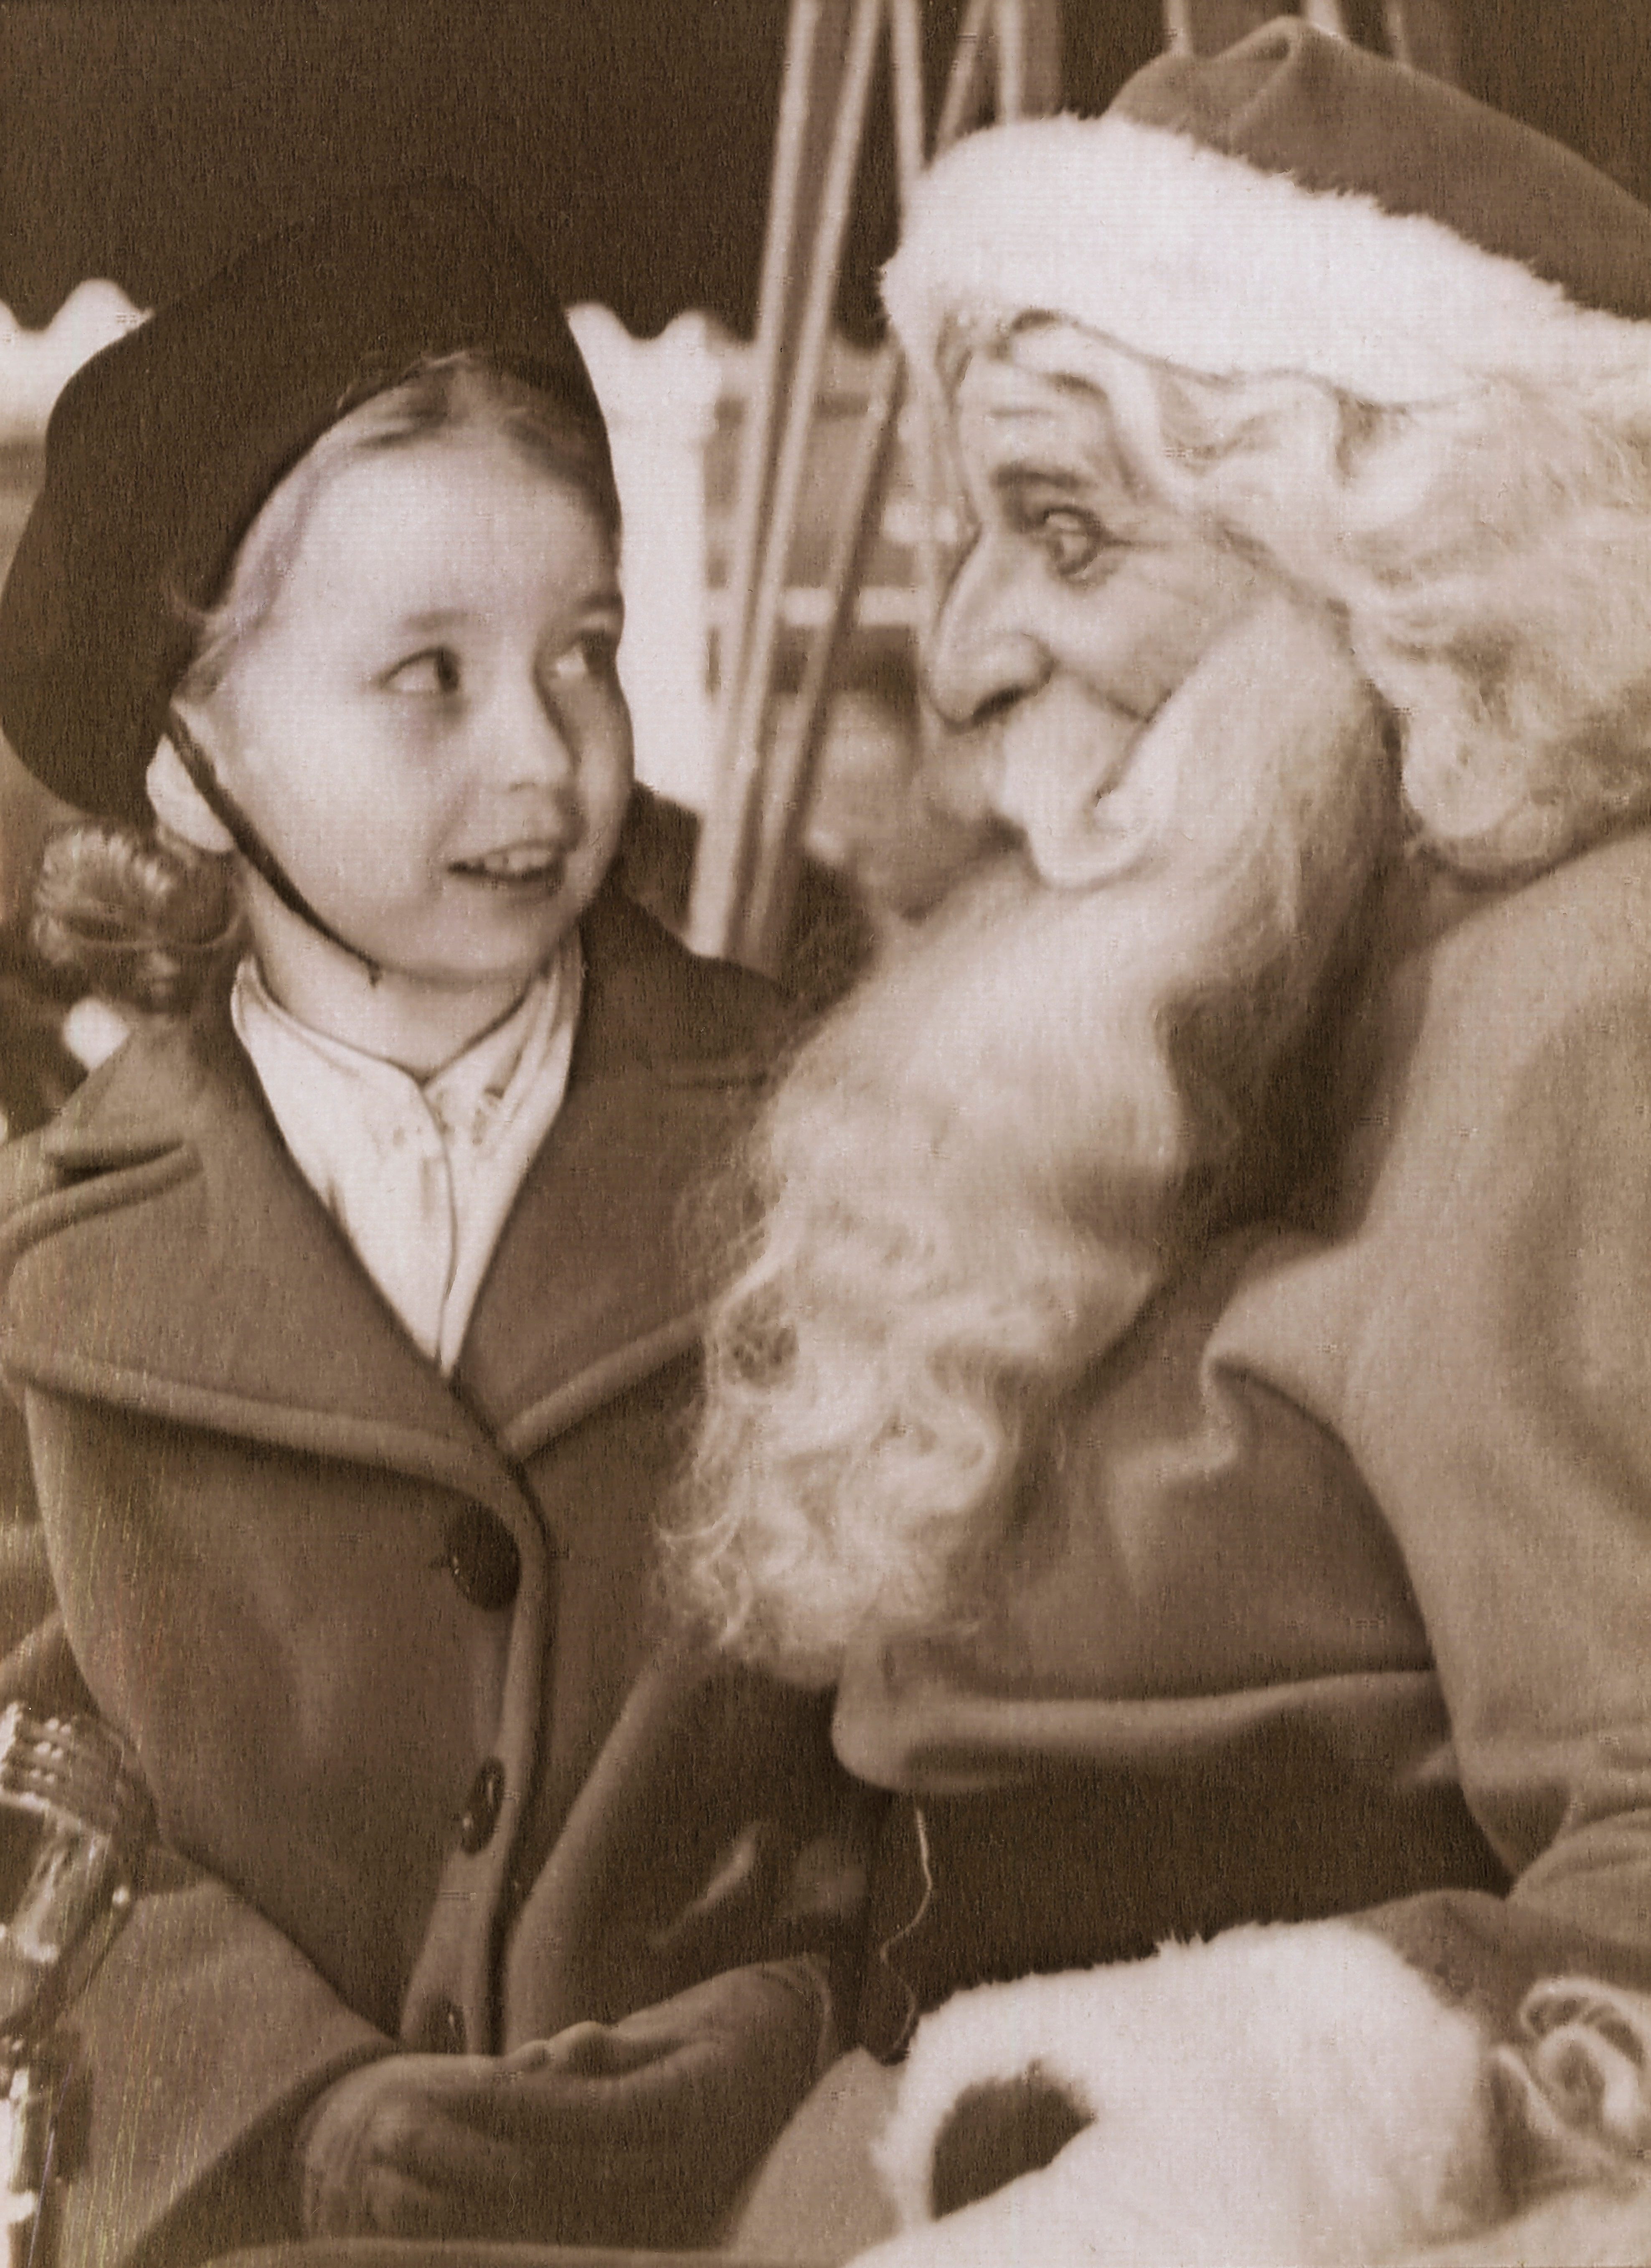 Adorable Vintage Photos of Kids Meeting Santa